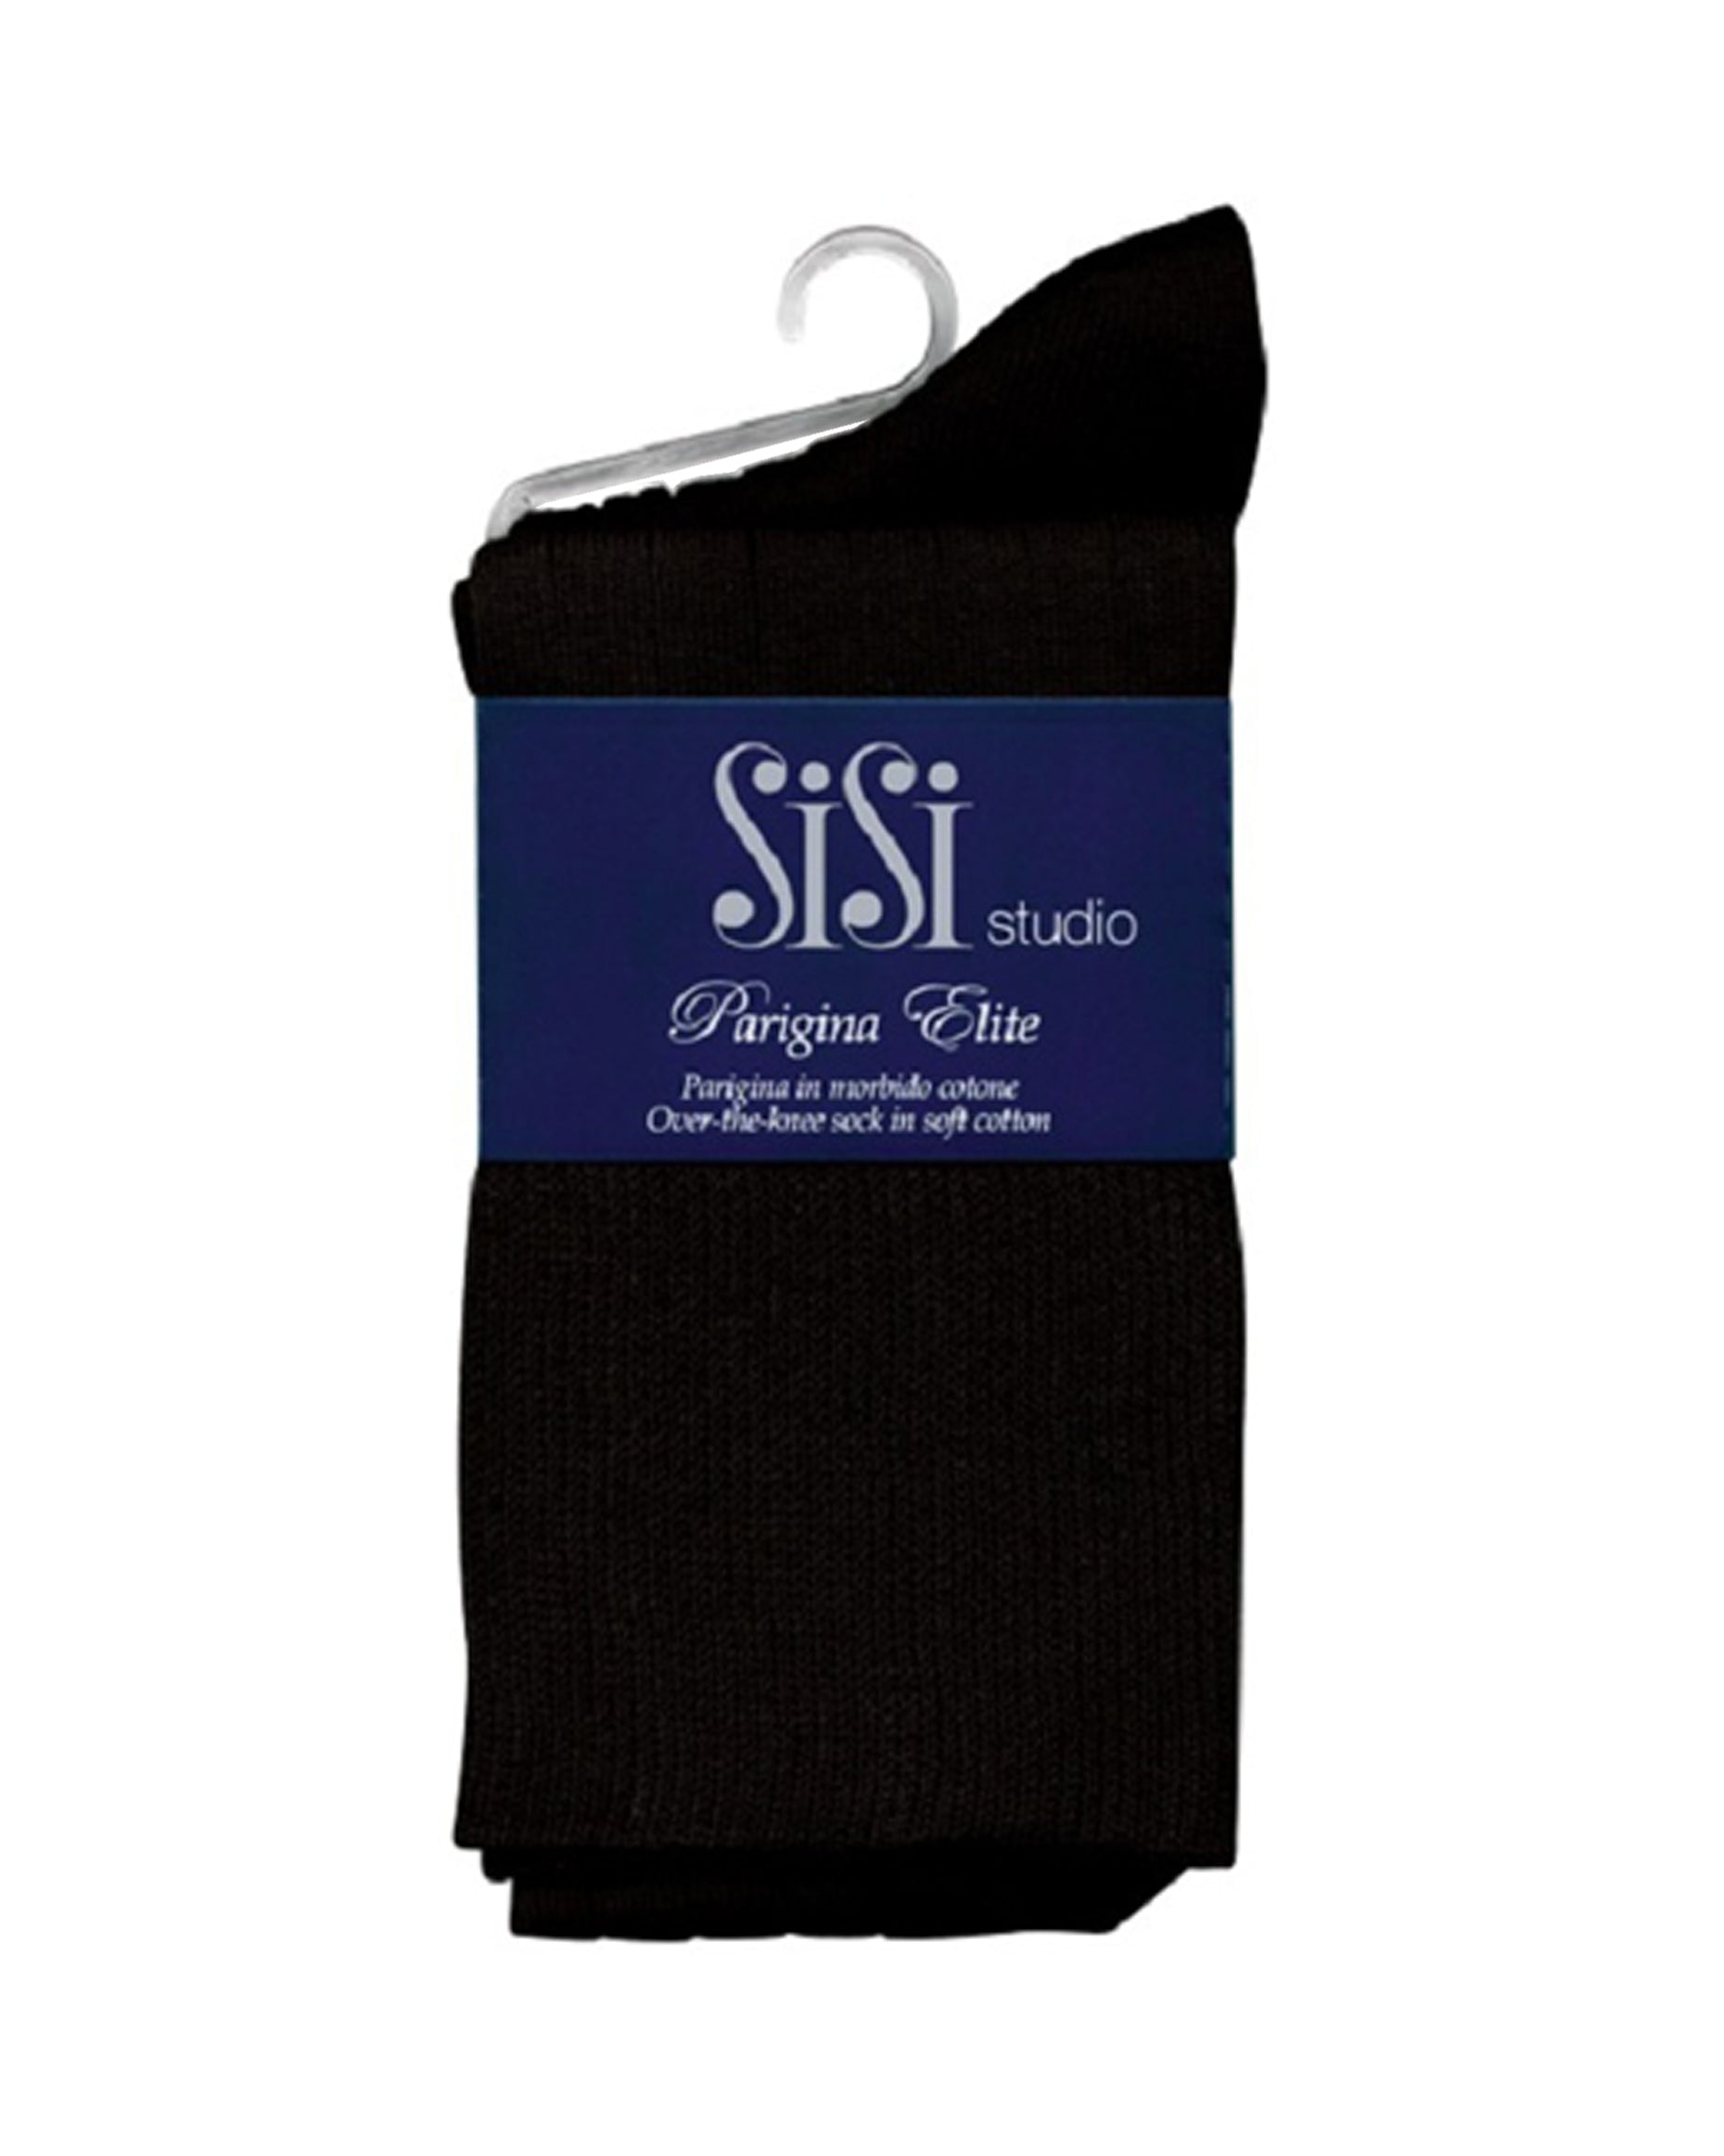 SiSi Parigina Elite Studio - Black light weight cotton ribbed socks pack.